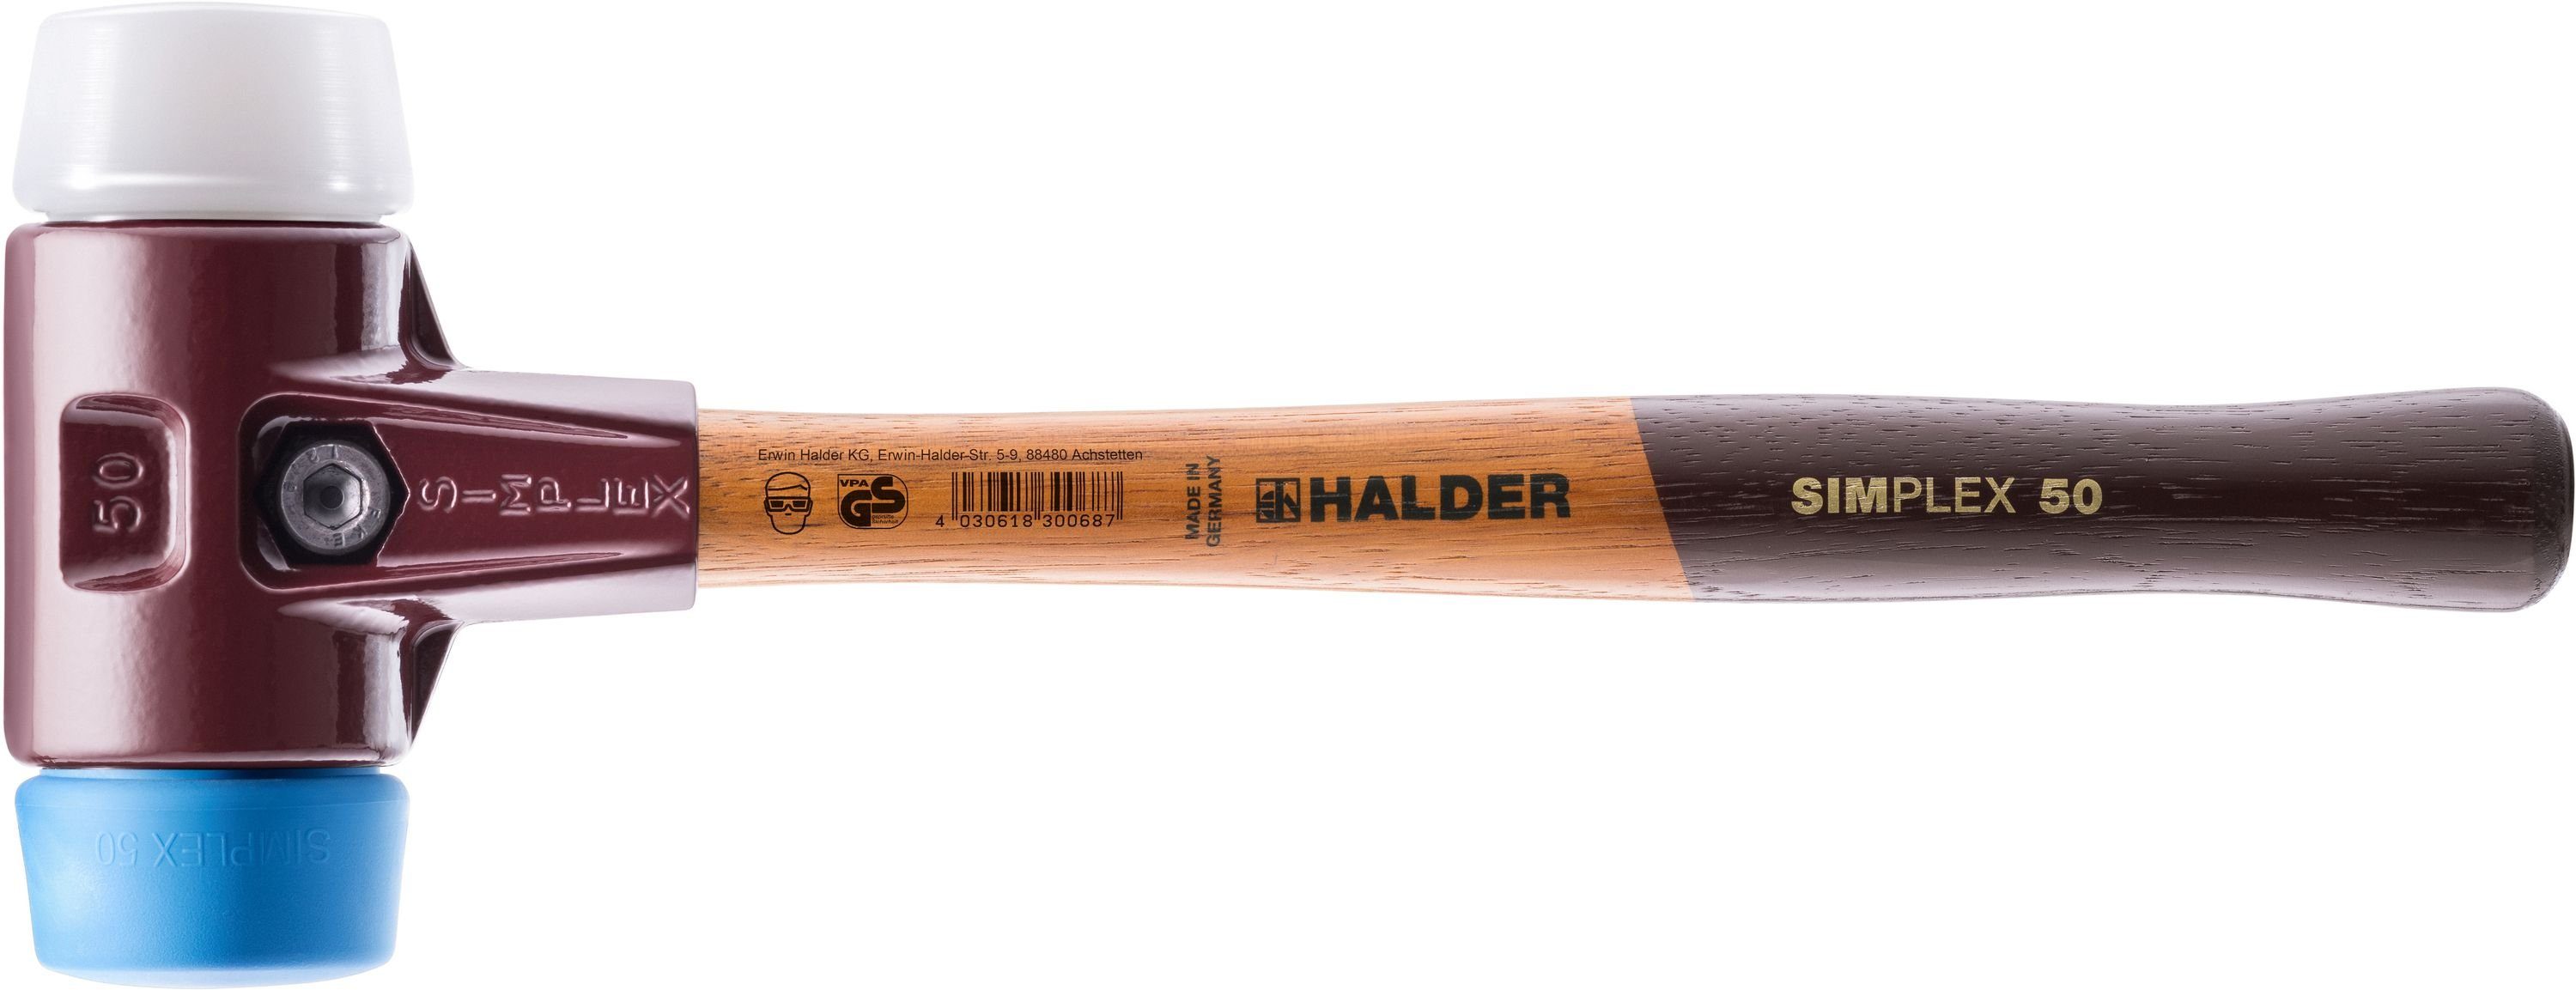 Halder KG Hammer / Ø Superplastik Stahlgussgehäuse 50:40, SIMPLEX-Schonhammer, TPE-soft